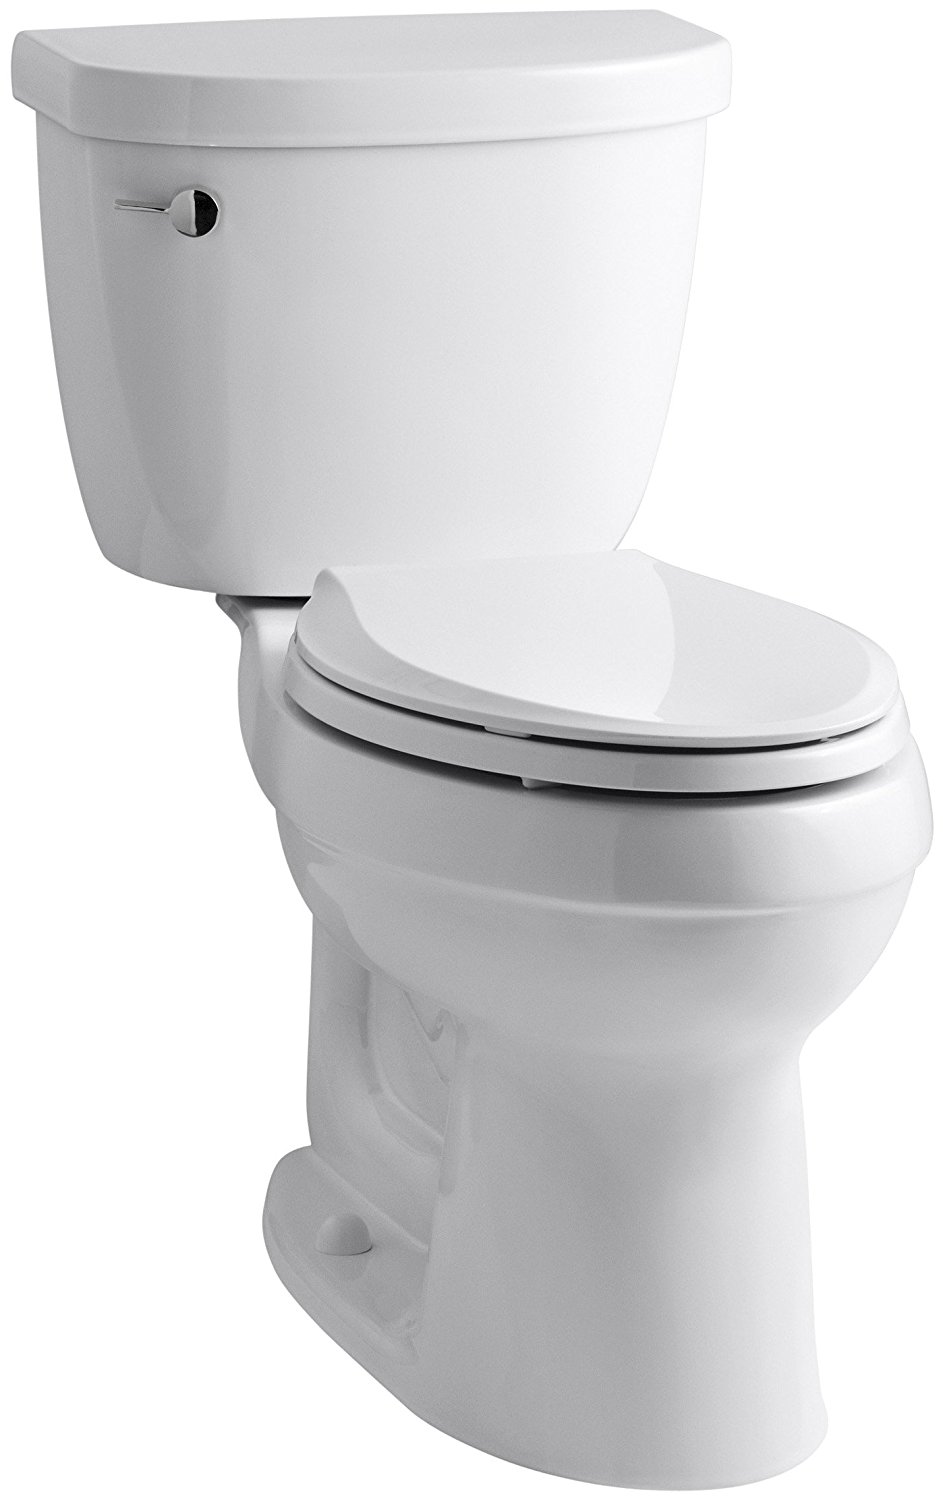 KOHLER K-3589-0 Cimarron Comfort Height Elongated 1.6 gpf Toilet with AquaPiston Technology, Less Seat, White